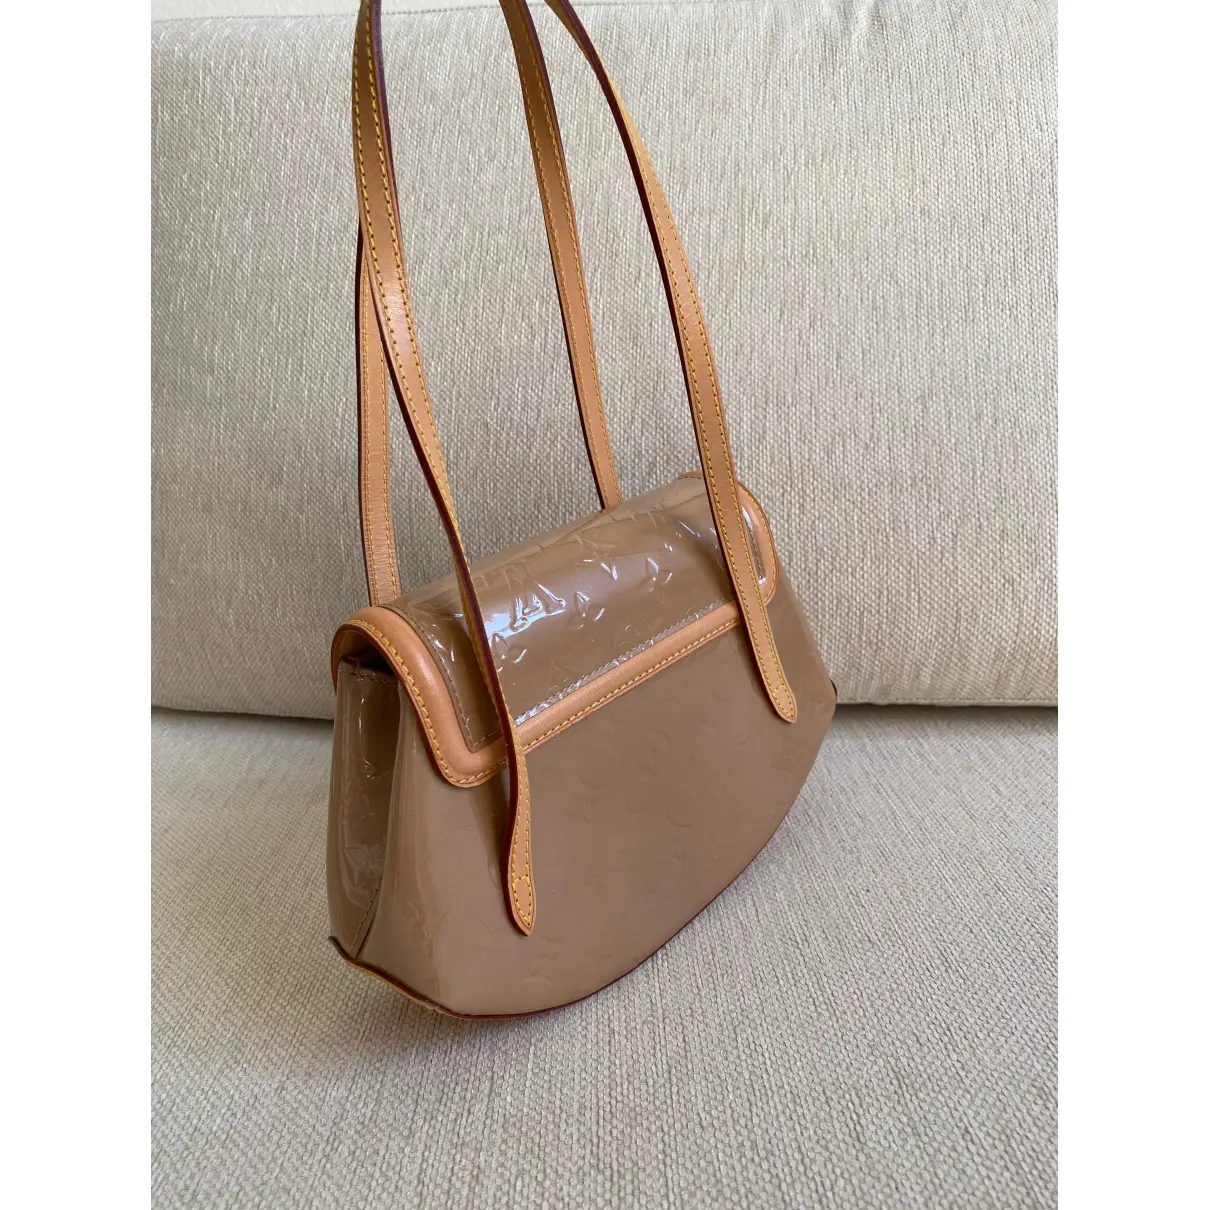 Buy Louis Vuitton Biscayne Bay patent leather handbag online